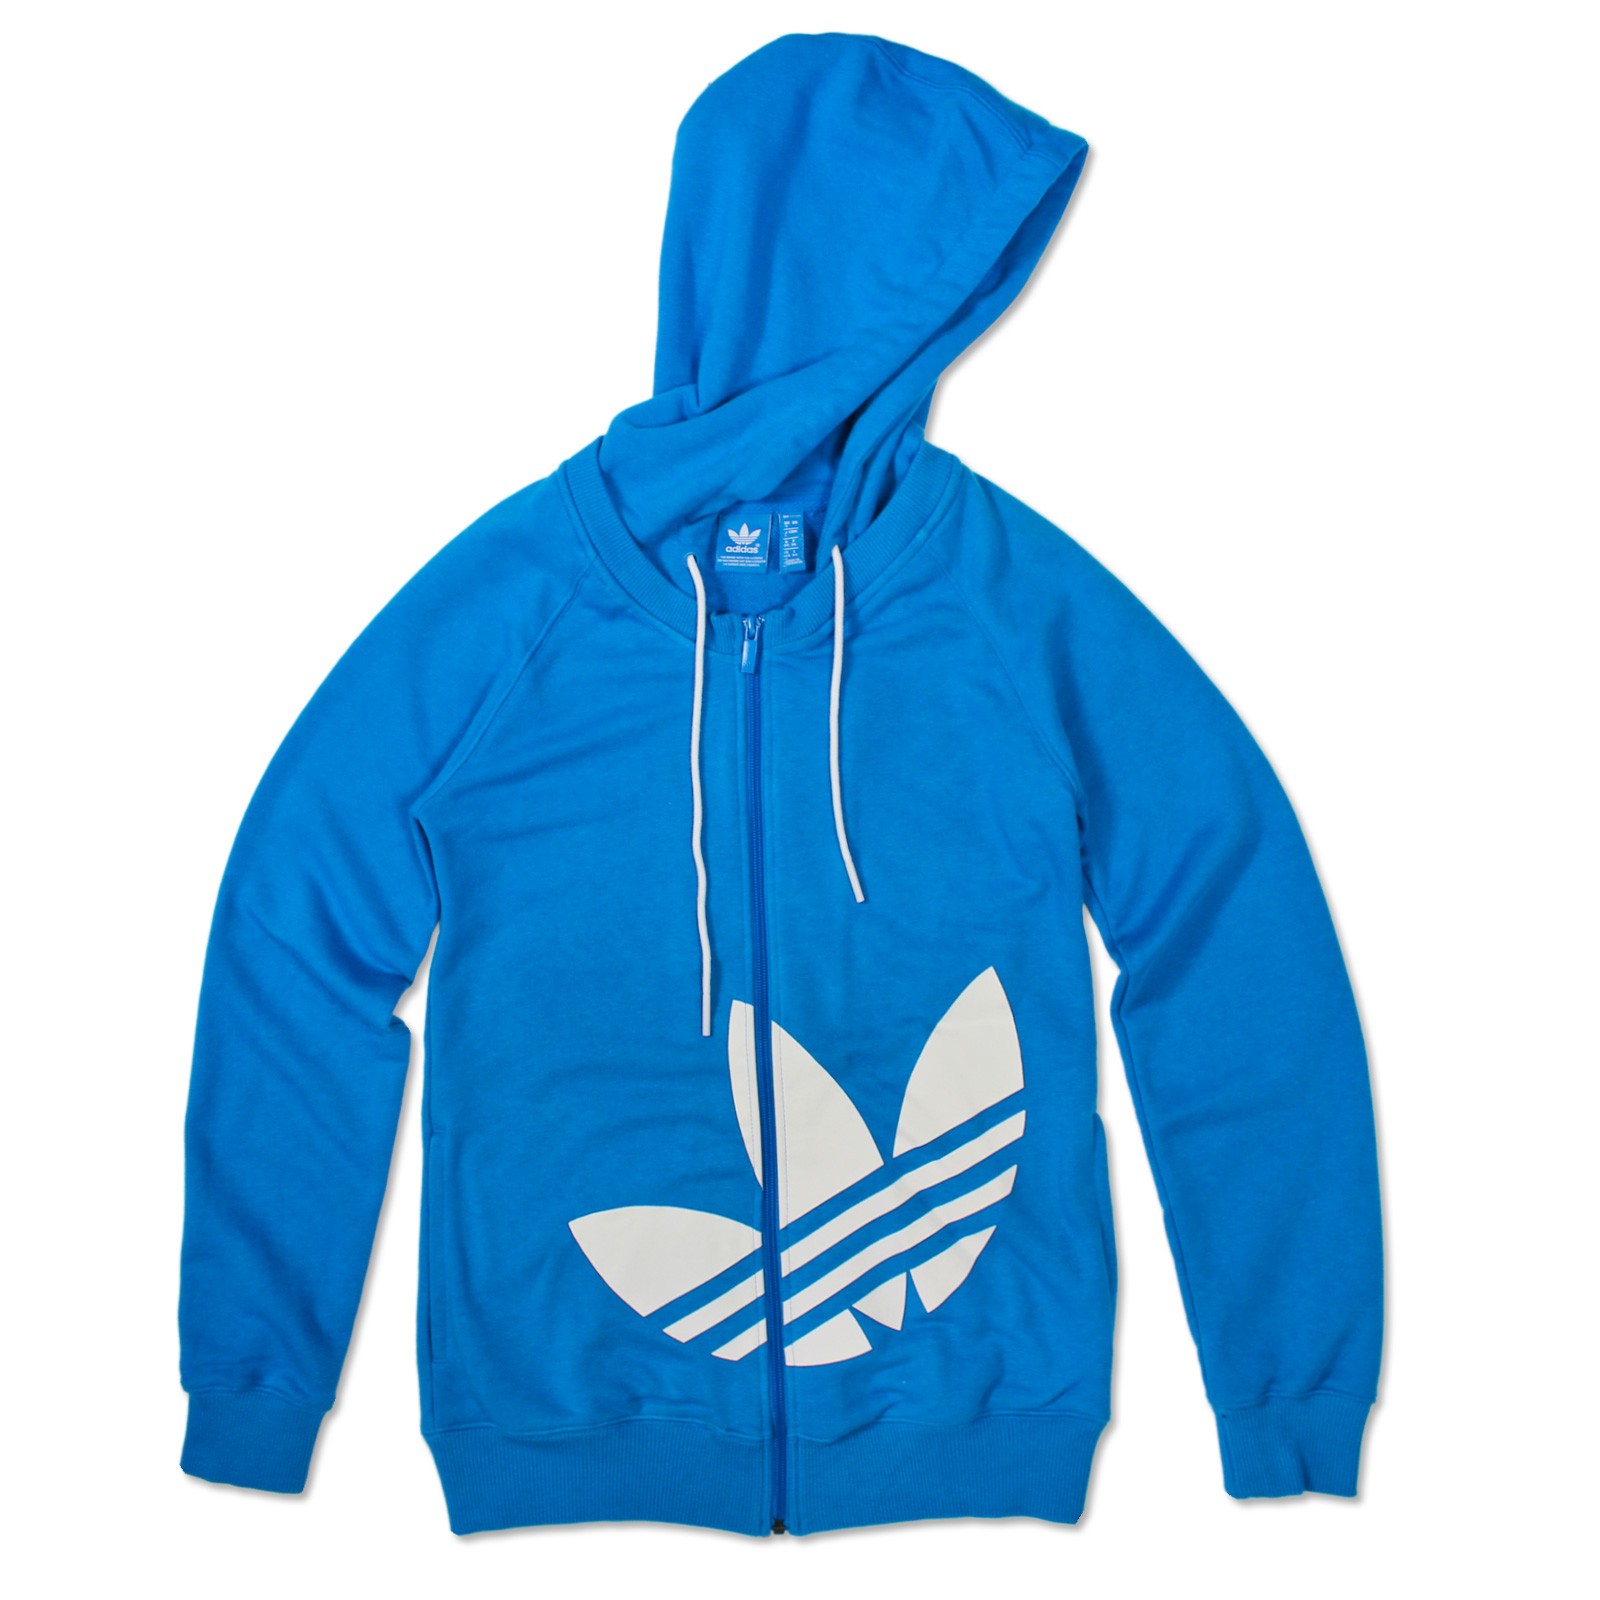 Adidas Originals Trefoil Women's Hooded Zip Sweater Jacket Retro Blue ...